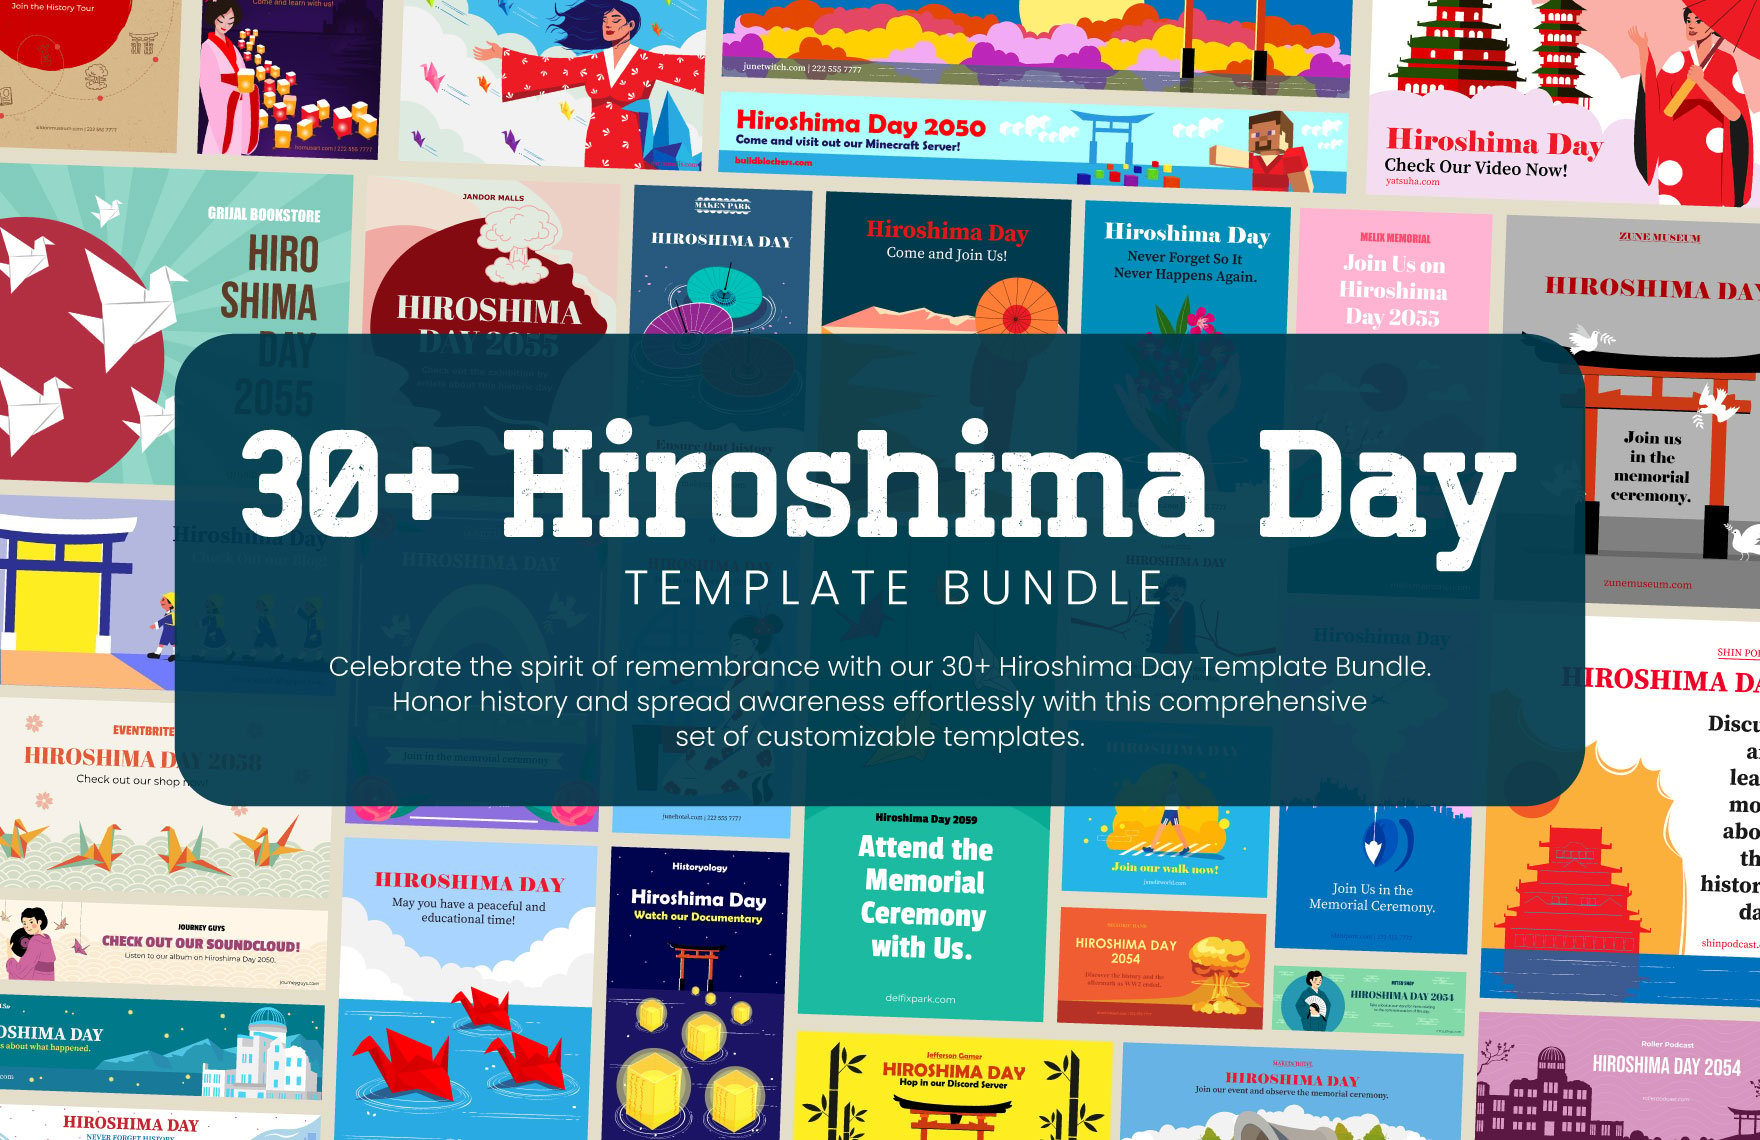 Free 30+ Hiroshima Day Template Bundle in Word, Google Docs, PDF, Illustrator, PSD, EPS, SVG, PNG, JPEG